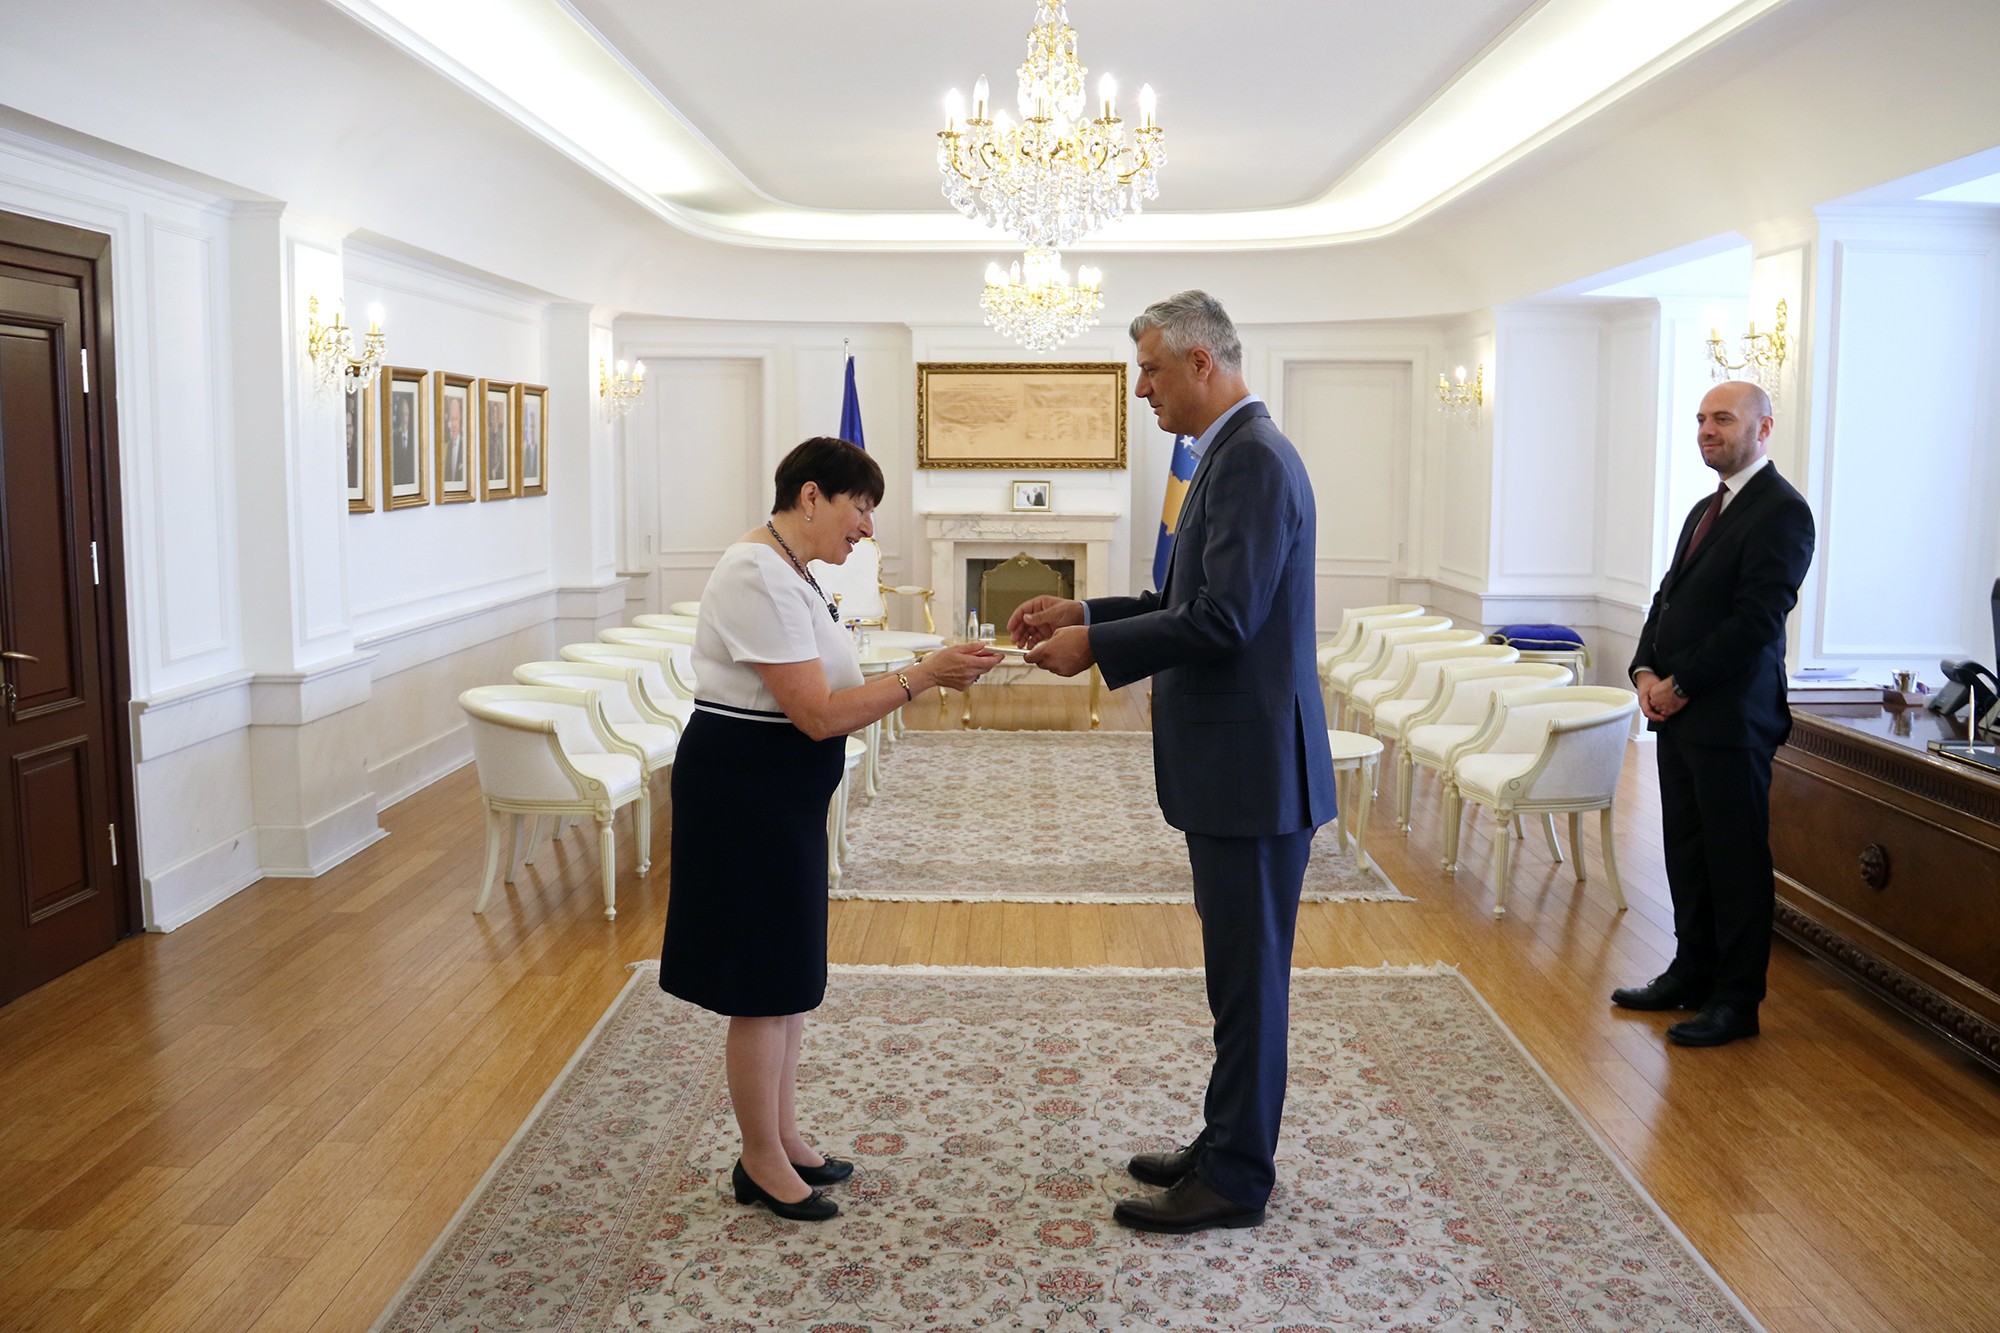 Presidenti Thaçi pranoi letrat kredenciale nga ambasadorja e re e Francës